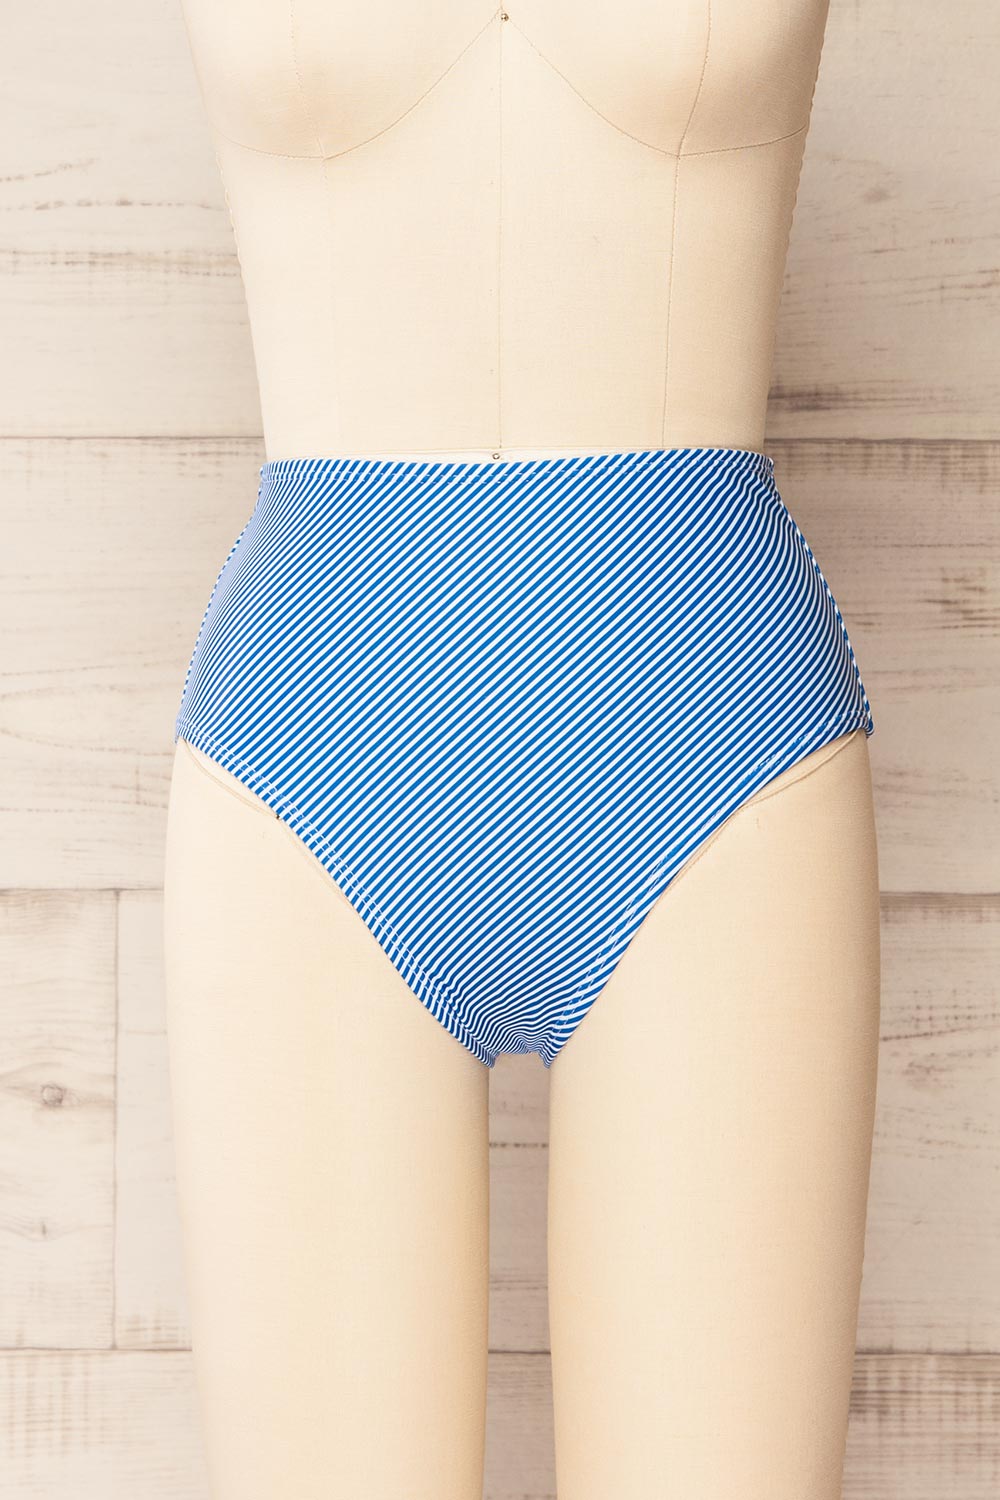 Engel Stripes Blue High-Waisted Bikini Bottom | La petite garçonne front view